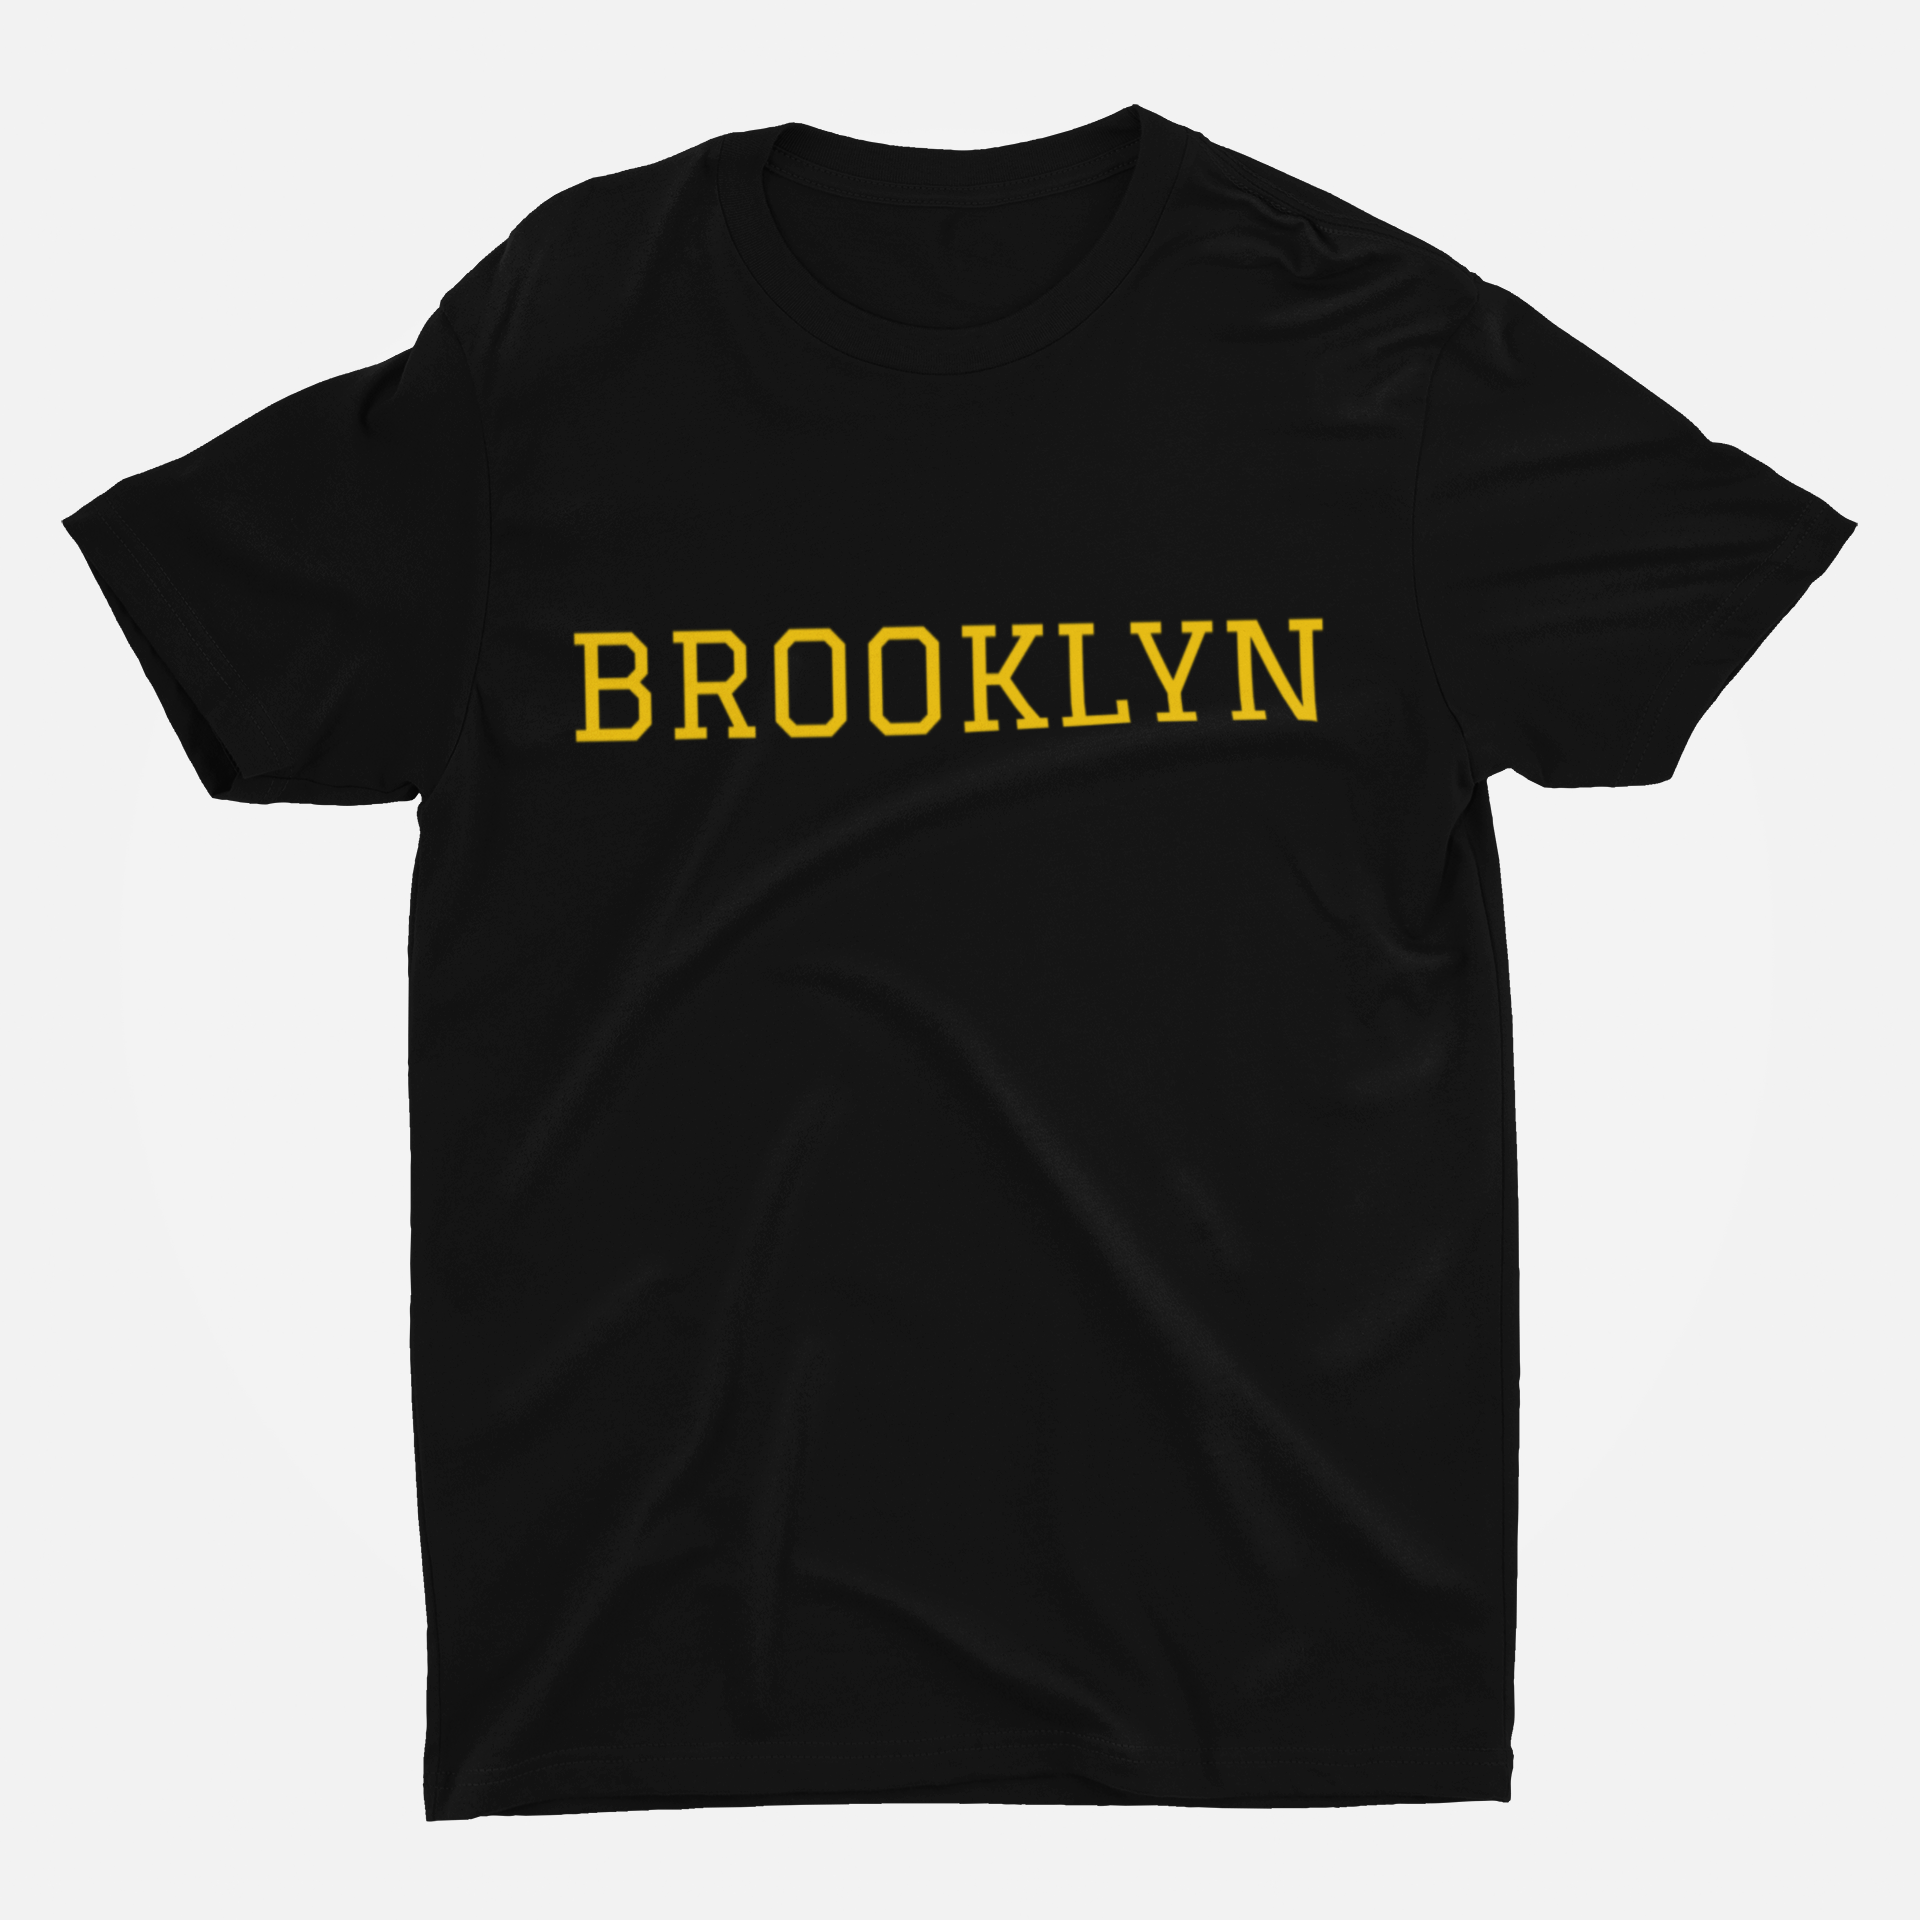 Brooklyn Yellow Font Black Round Neck T-Shirt for Men. 